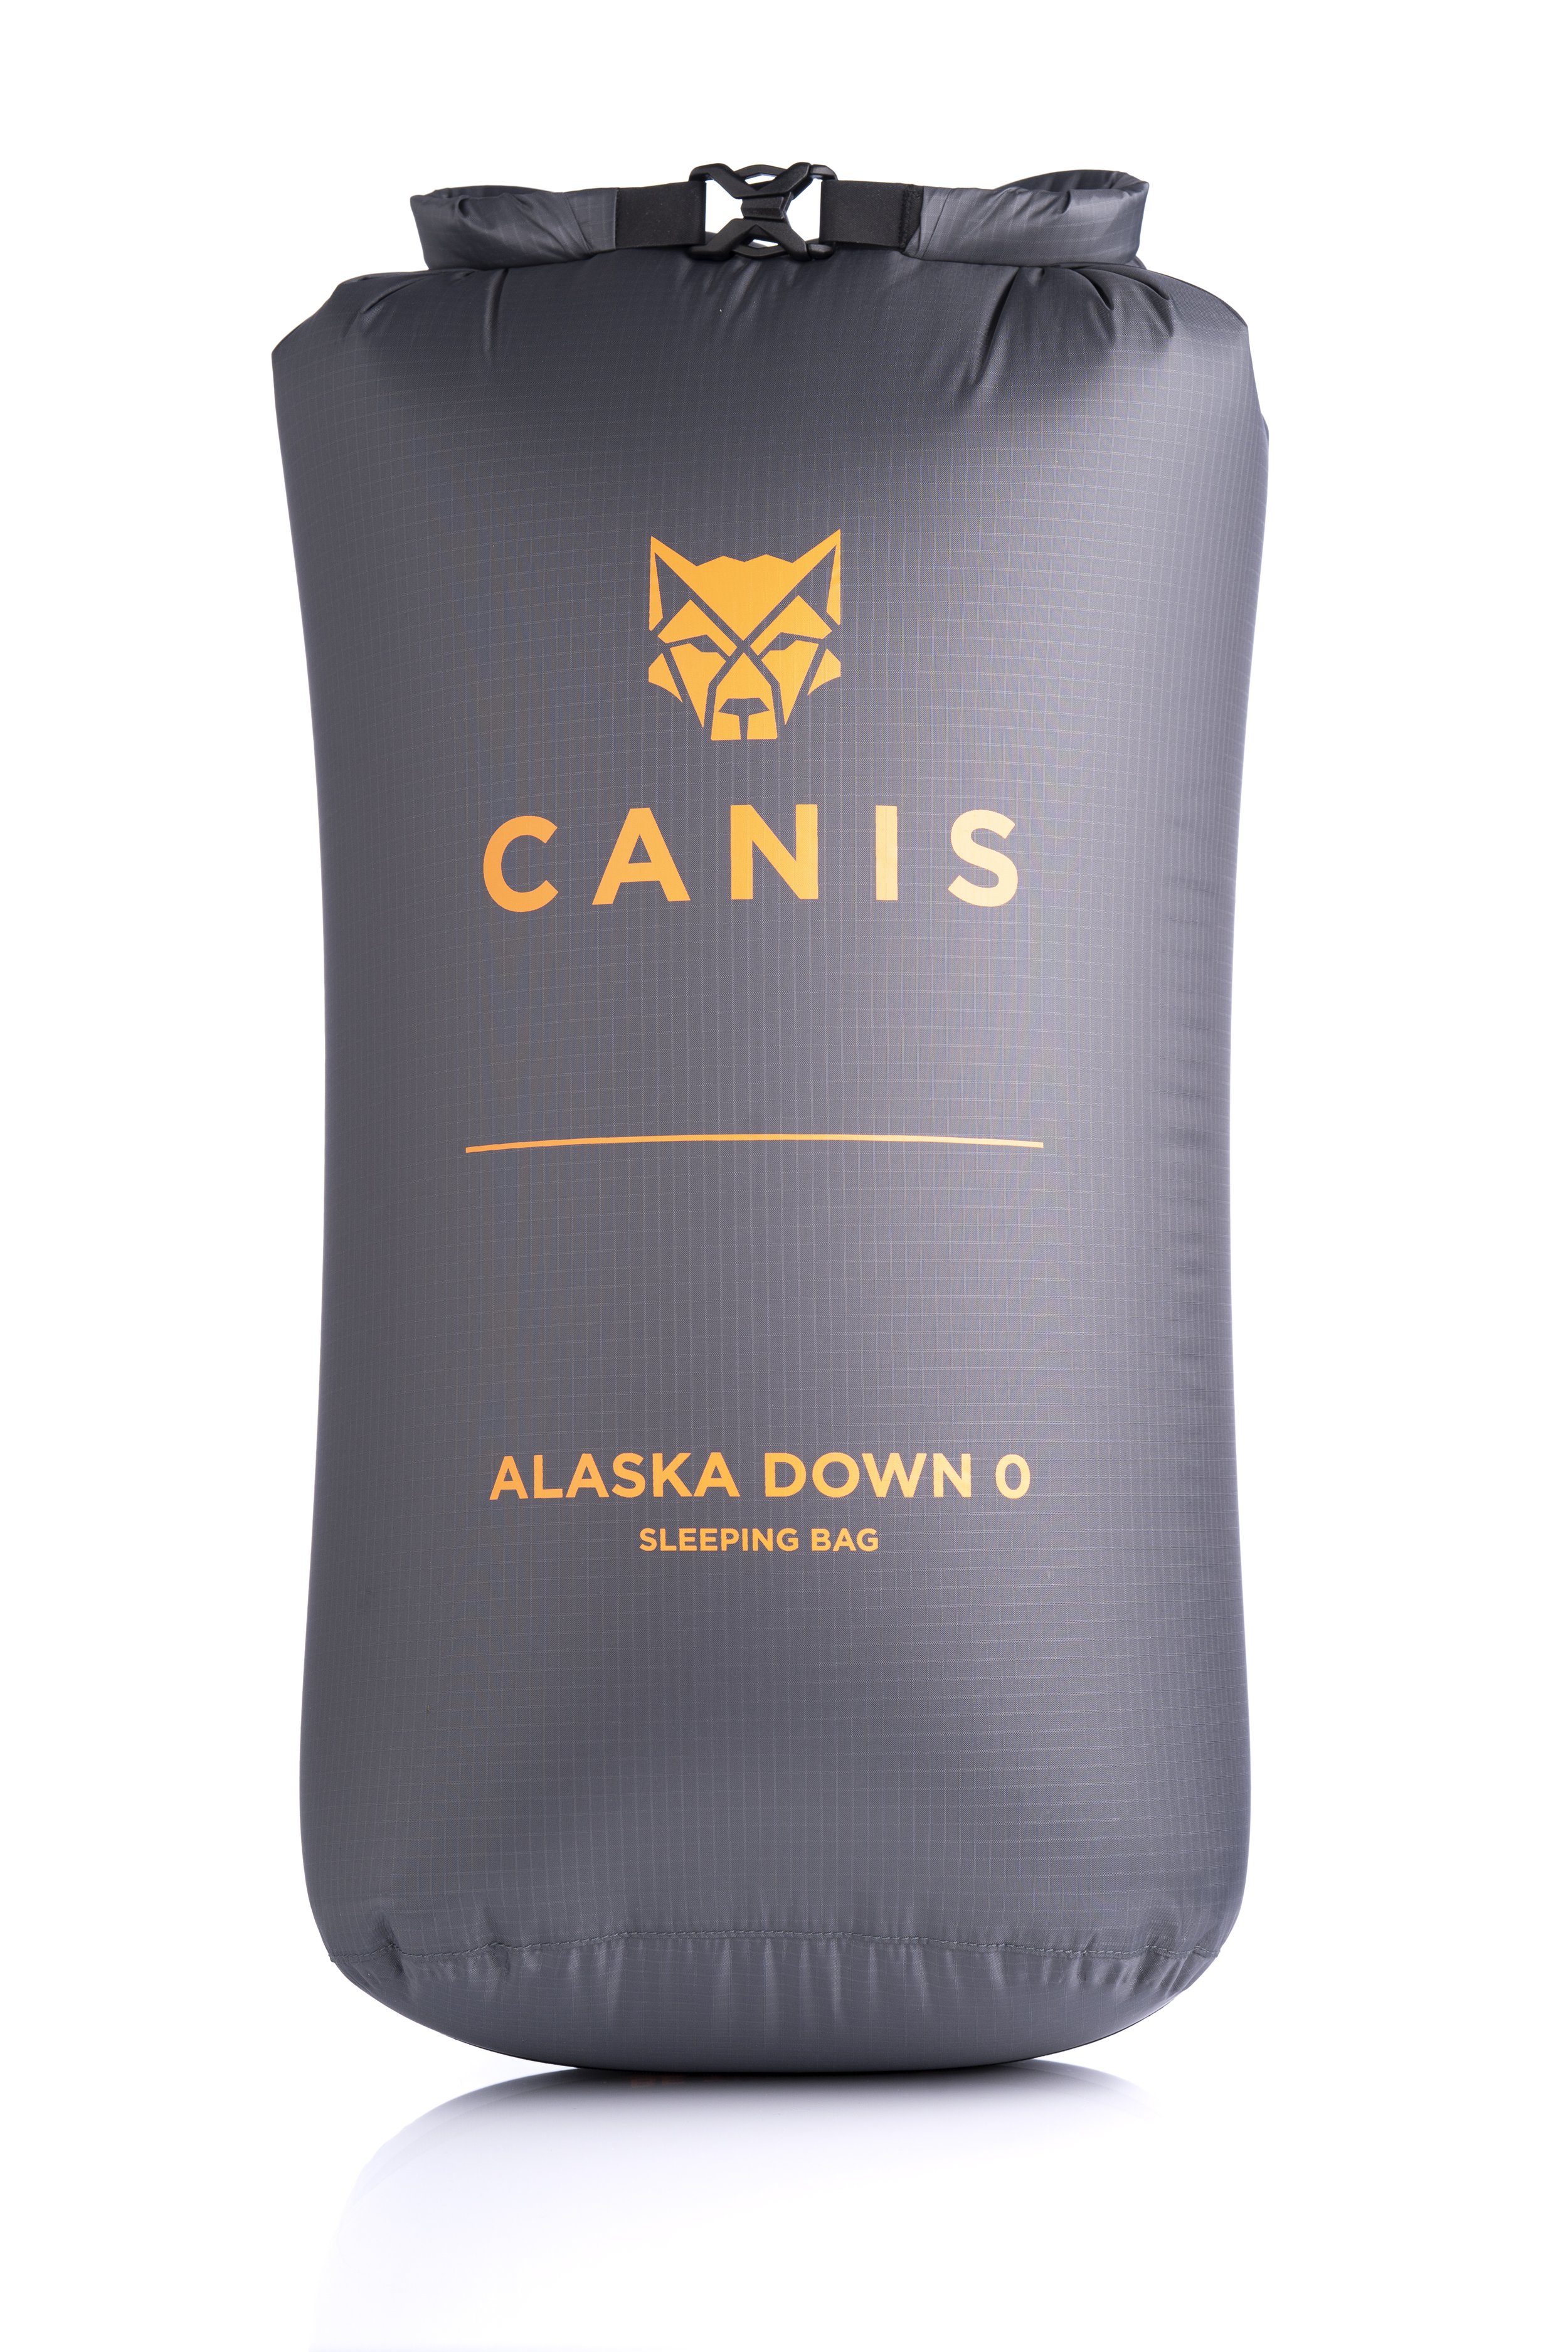 Alaska Down_0F_dry bag.jpg